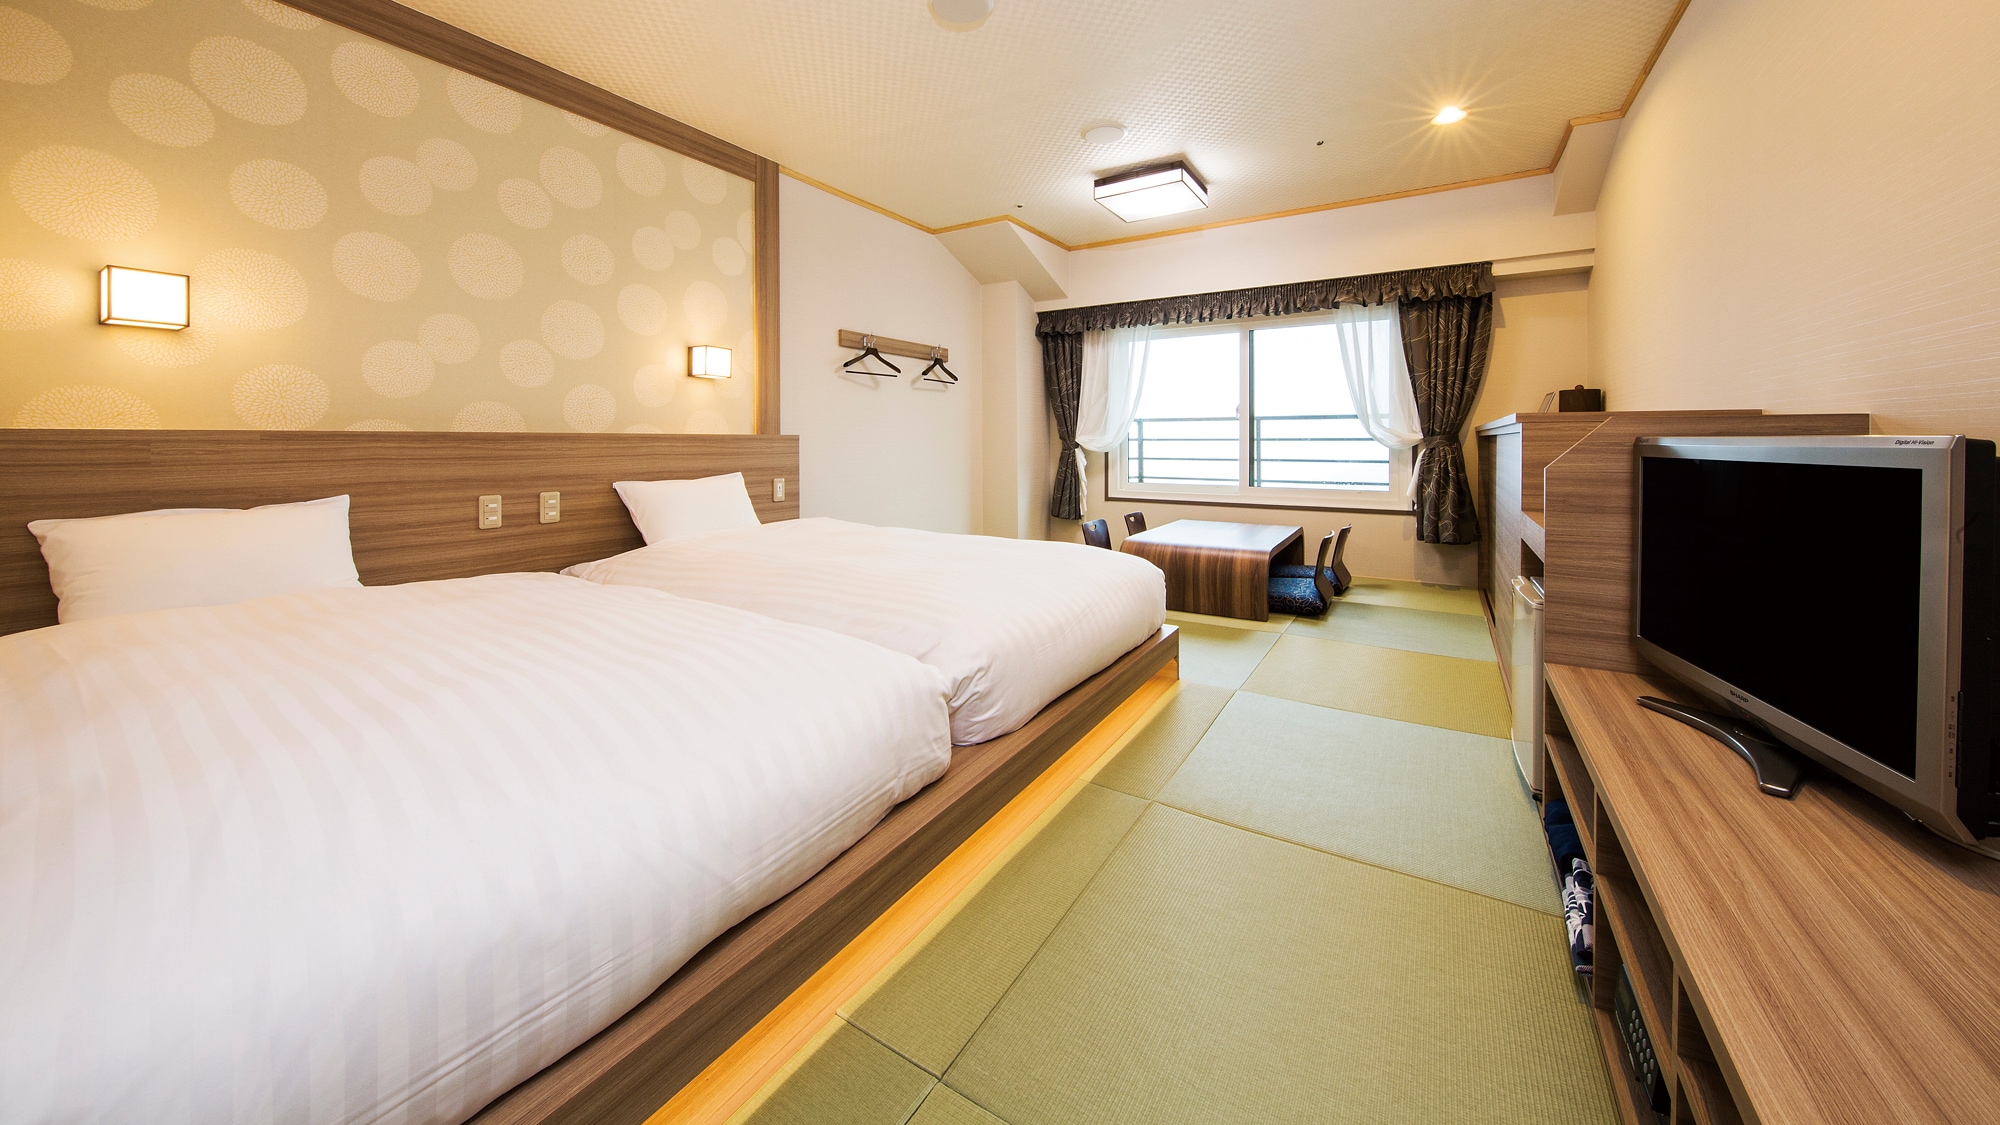 Contoh kamar standar Jepang dan Barat